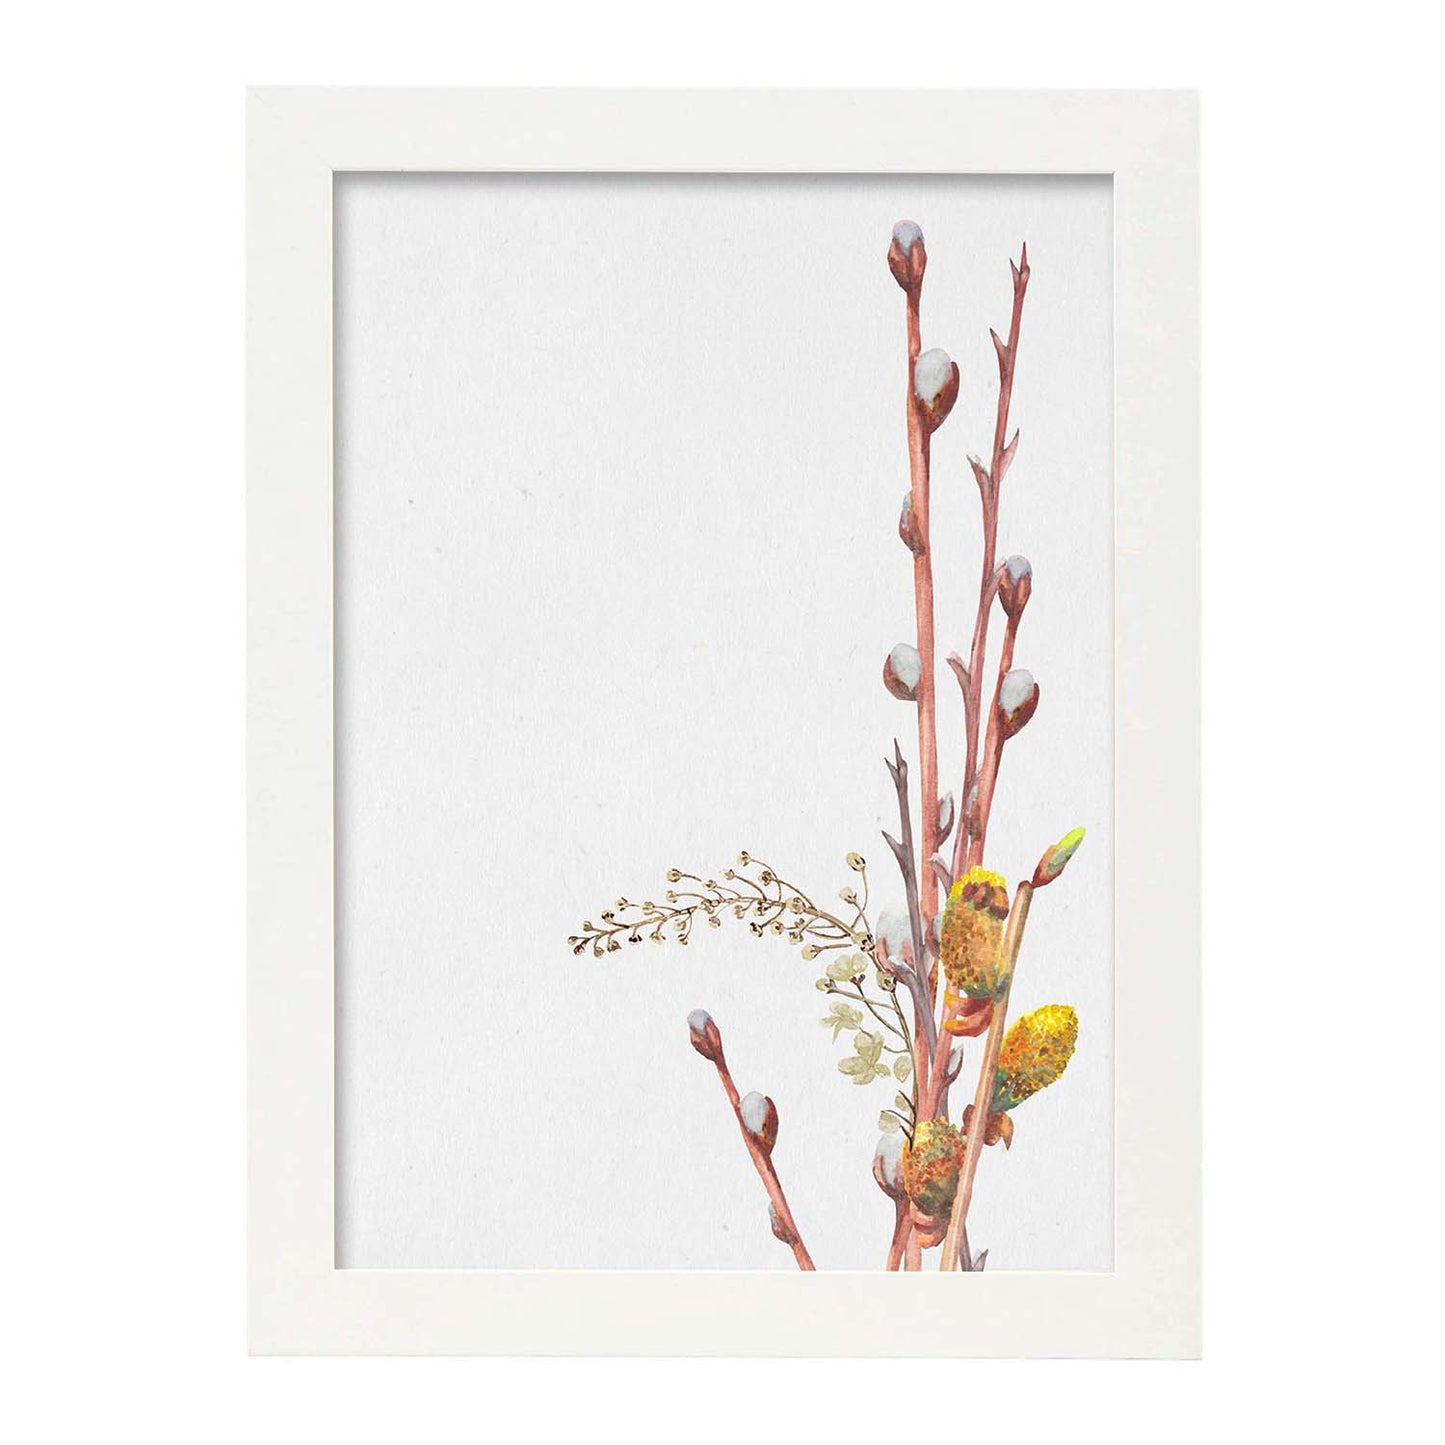 Poster de ramas con estilo de óleo. Lámina Ramas 8, con dibujos pintados de ramas, hojas, y flores.-Artwork-Nacnic-A3-Marco Blanco-Nacnic Estudio SL